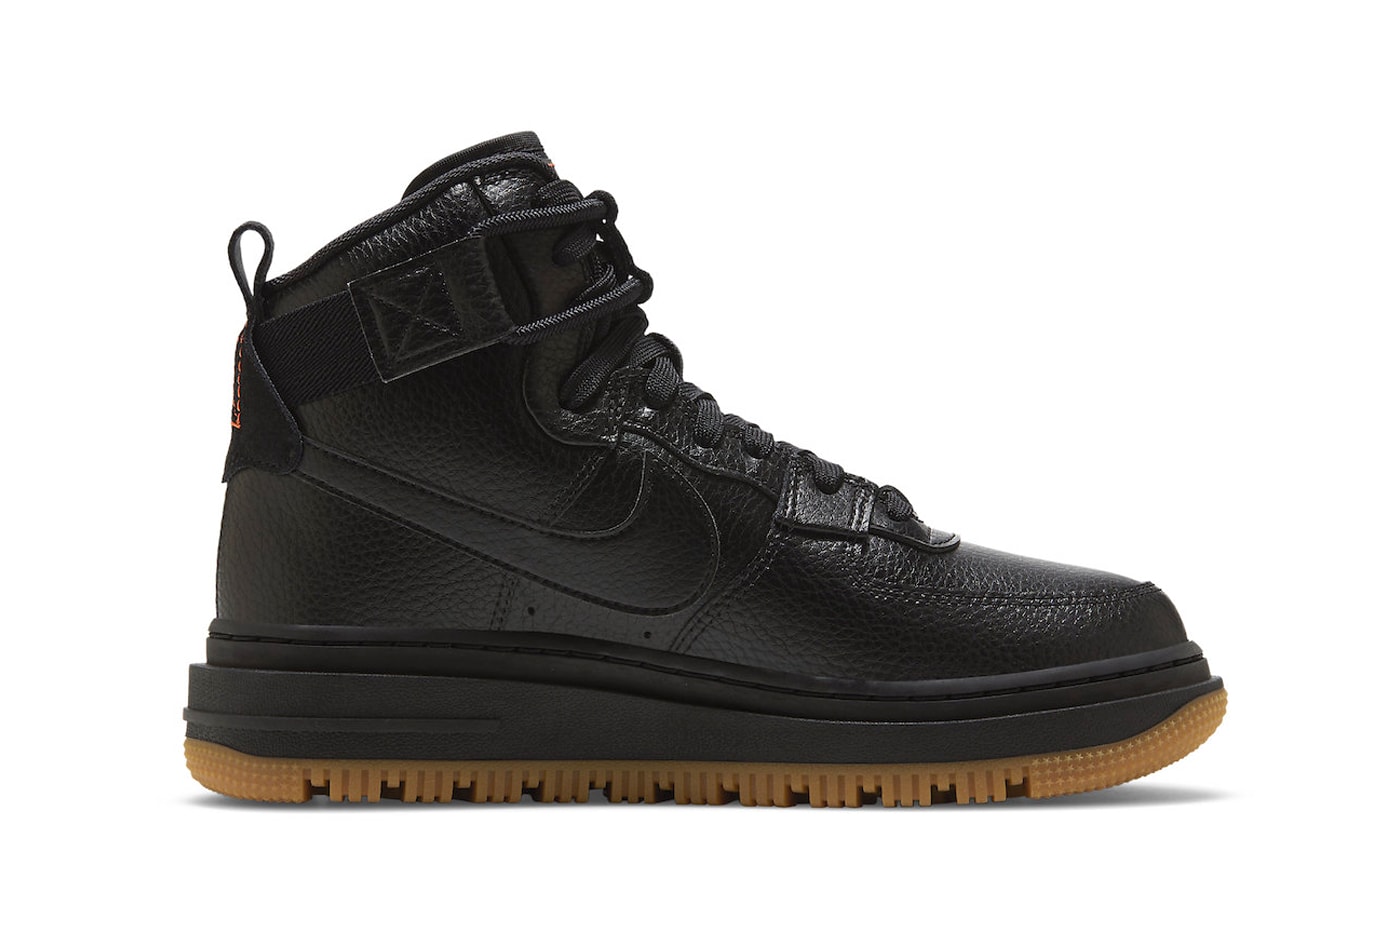 Nike Air Force 1 High Utility 2.0 in "Black Gum" Release Date footwear sneakers swoosh leather mesh suede black white Gum Red Brown orange